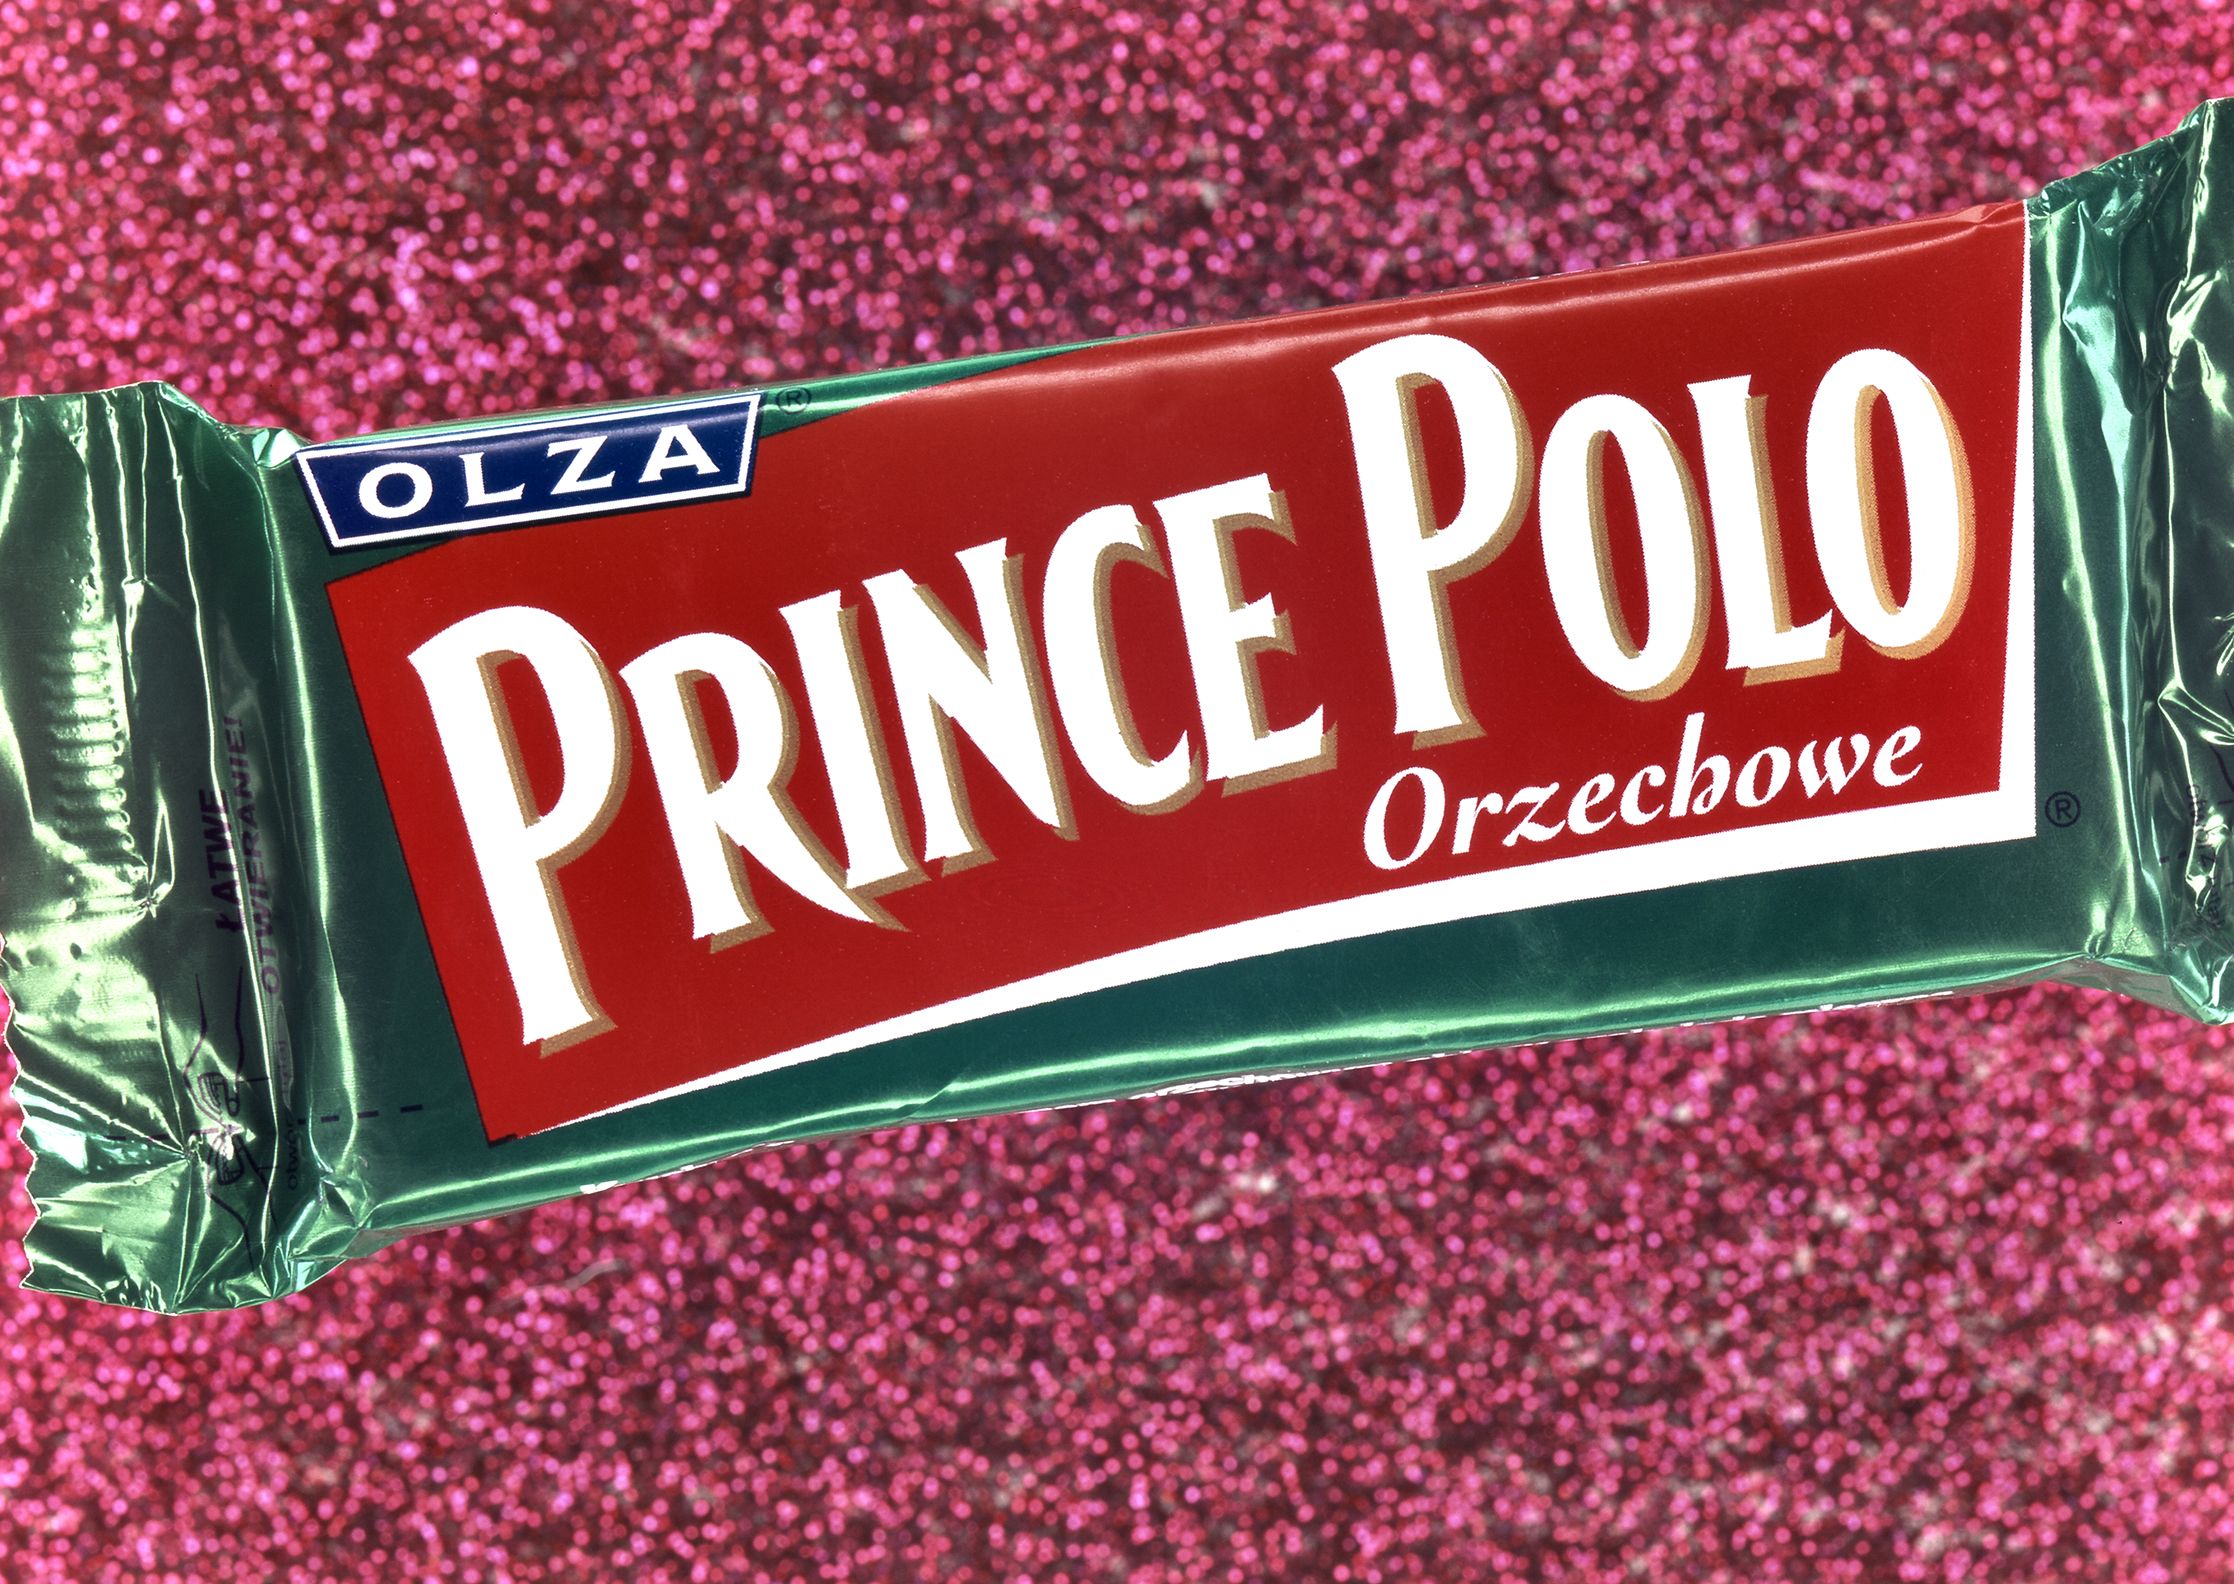 prince polo.jpg